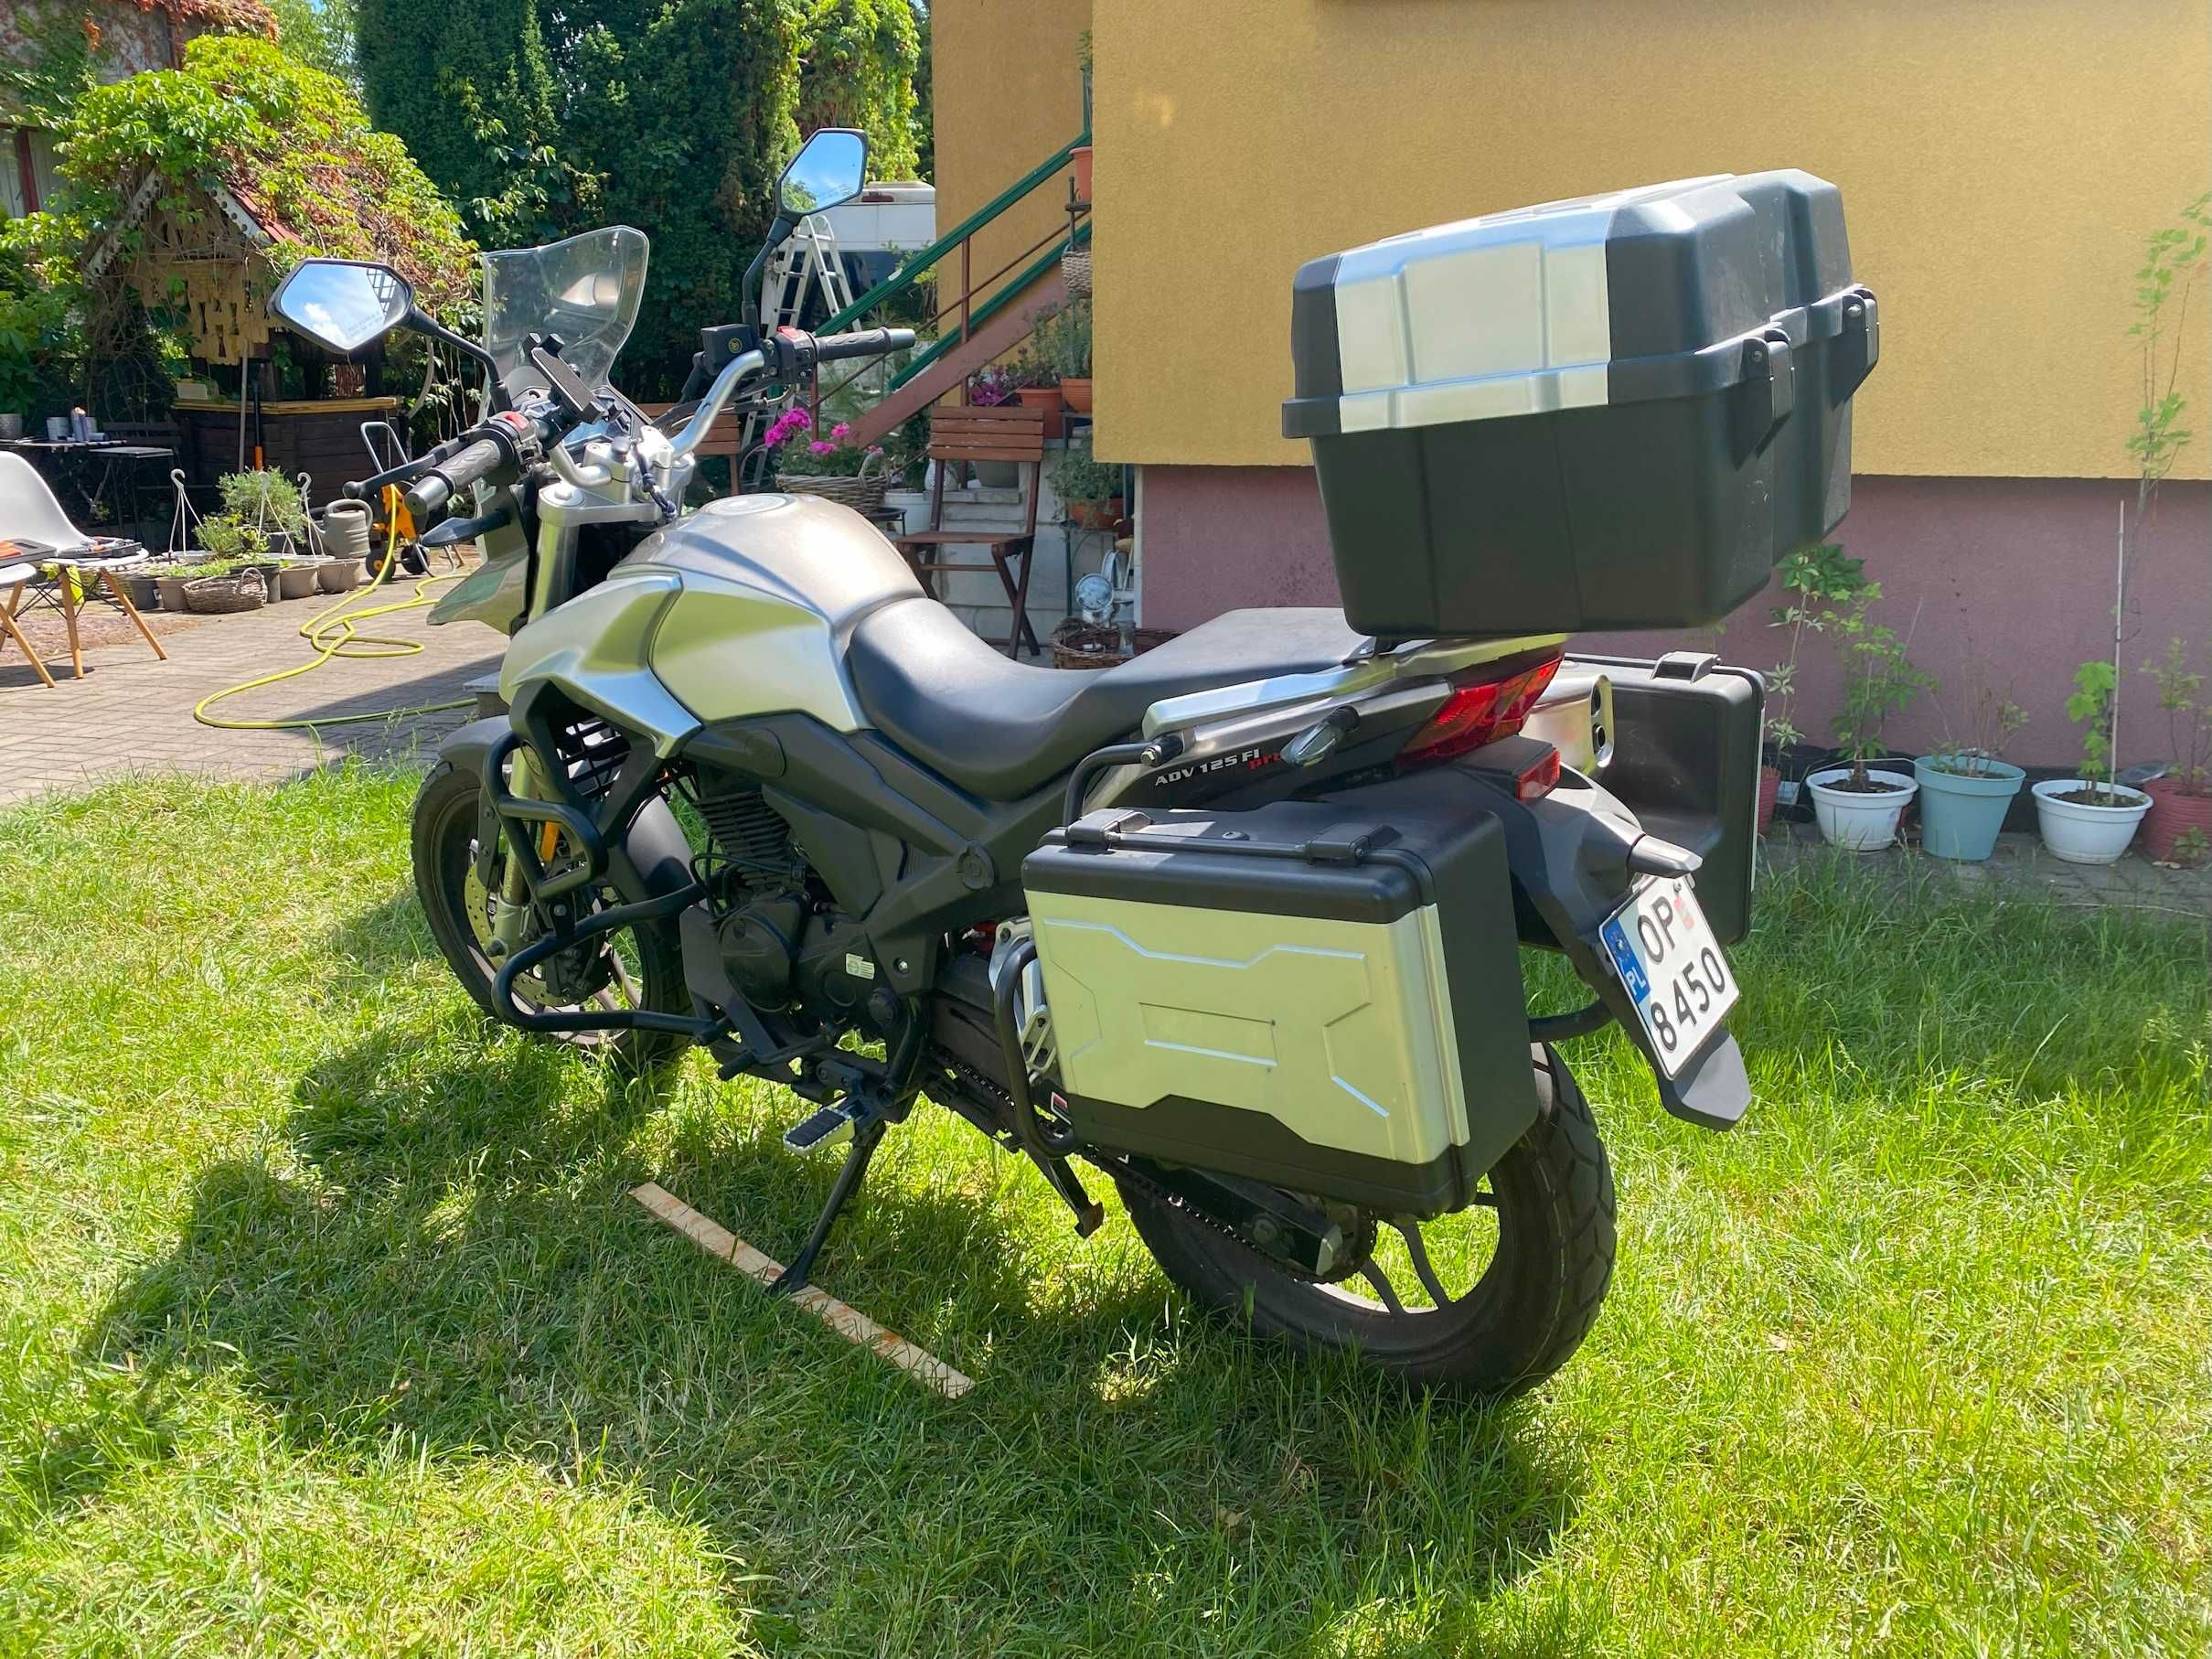 Motocykl Romet ADV 125 Fi Pro | kat. B | Kufry | Bardzo niski przebieg